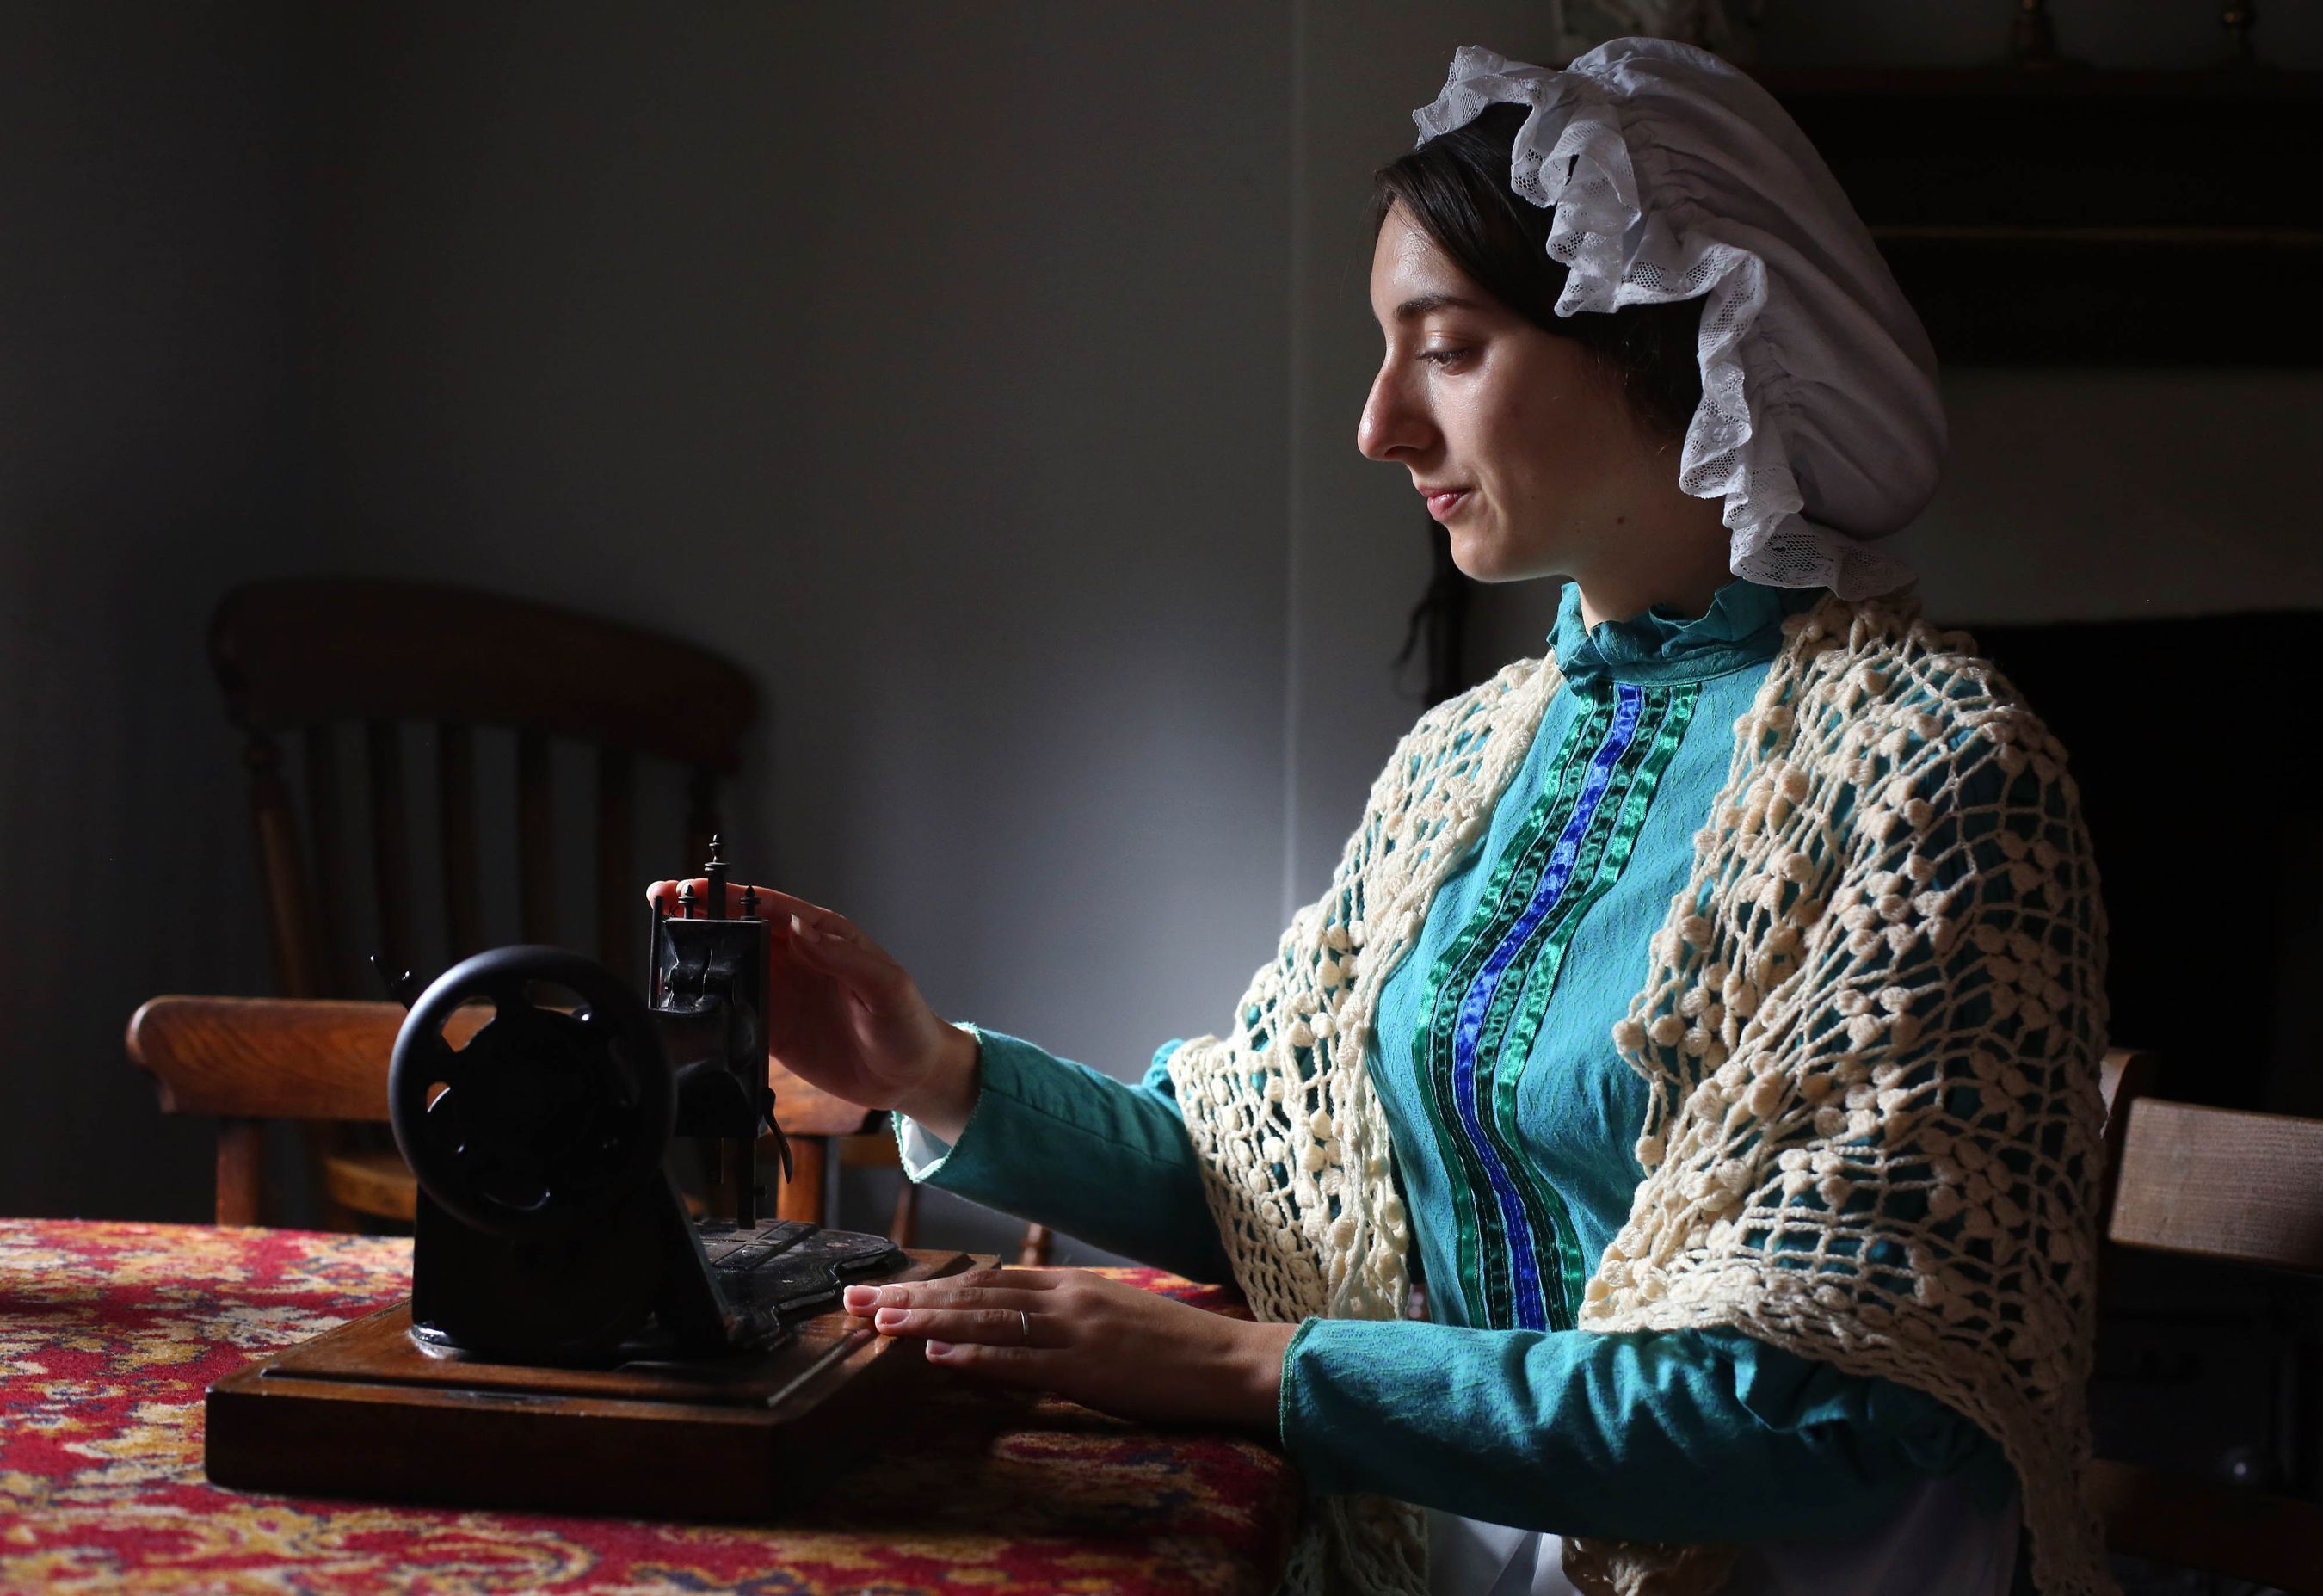 Number one most treasured item in 1890 the sewing machine (PRNewsFoto/UIA Insurance)